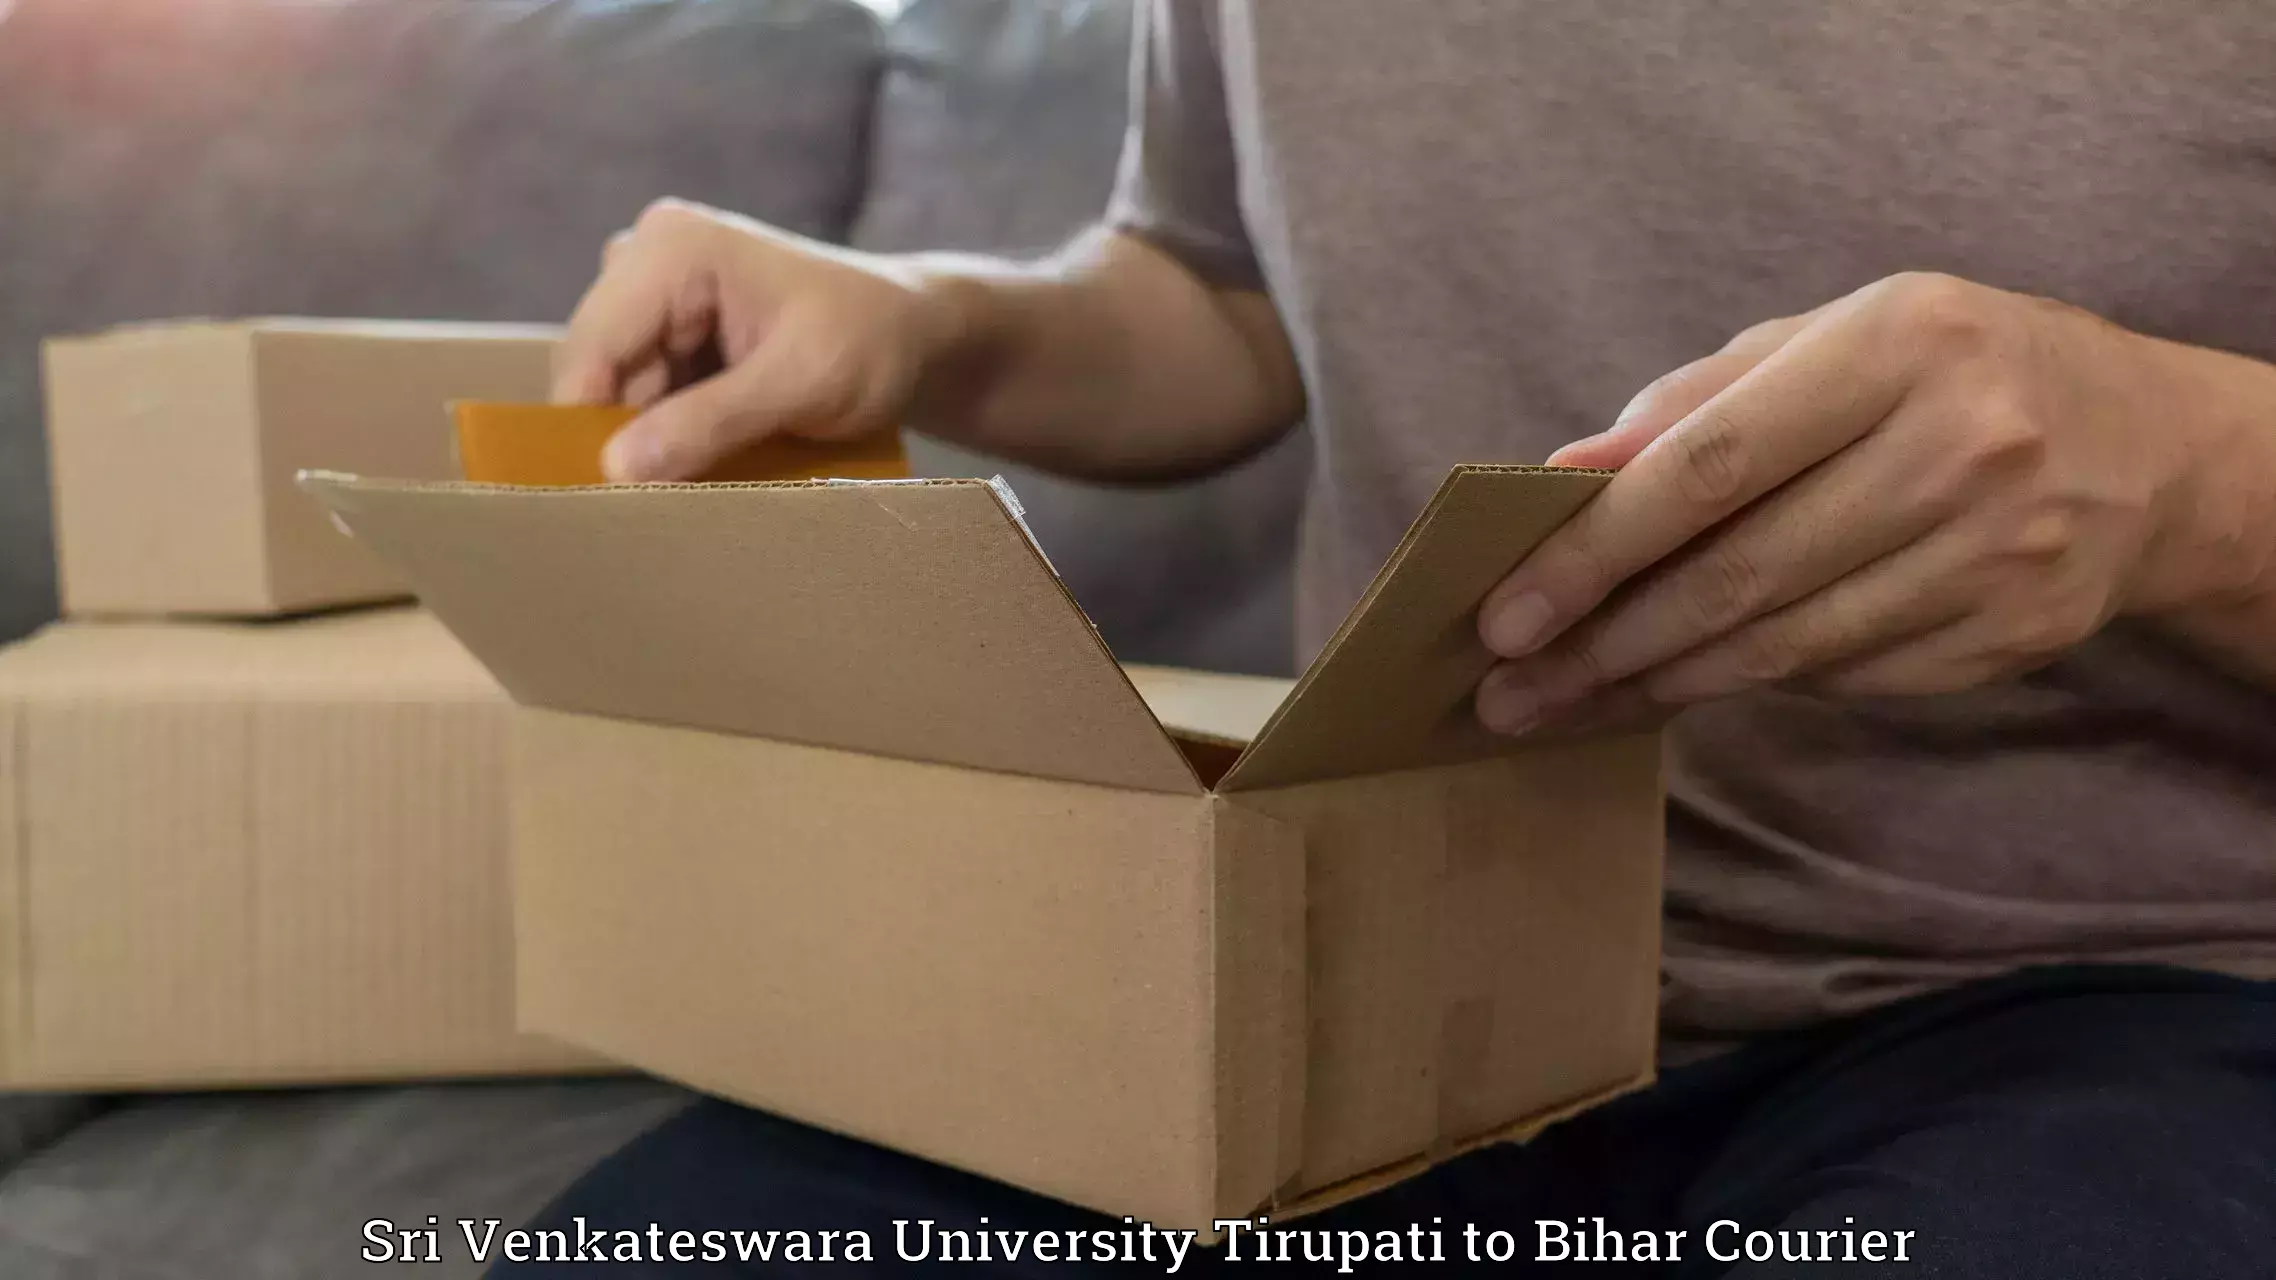 Quick booking process in Sri Venkateswara University Tirupati to Bihta